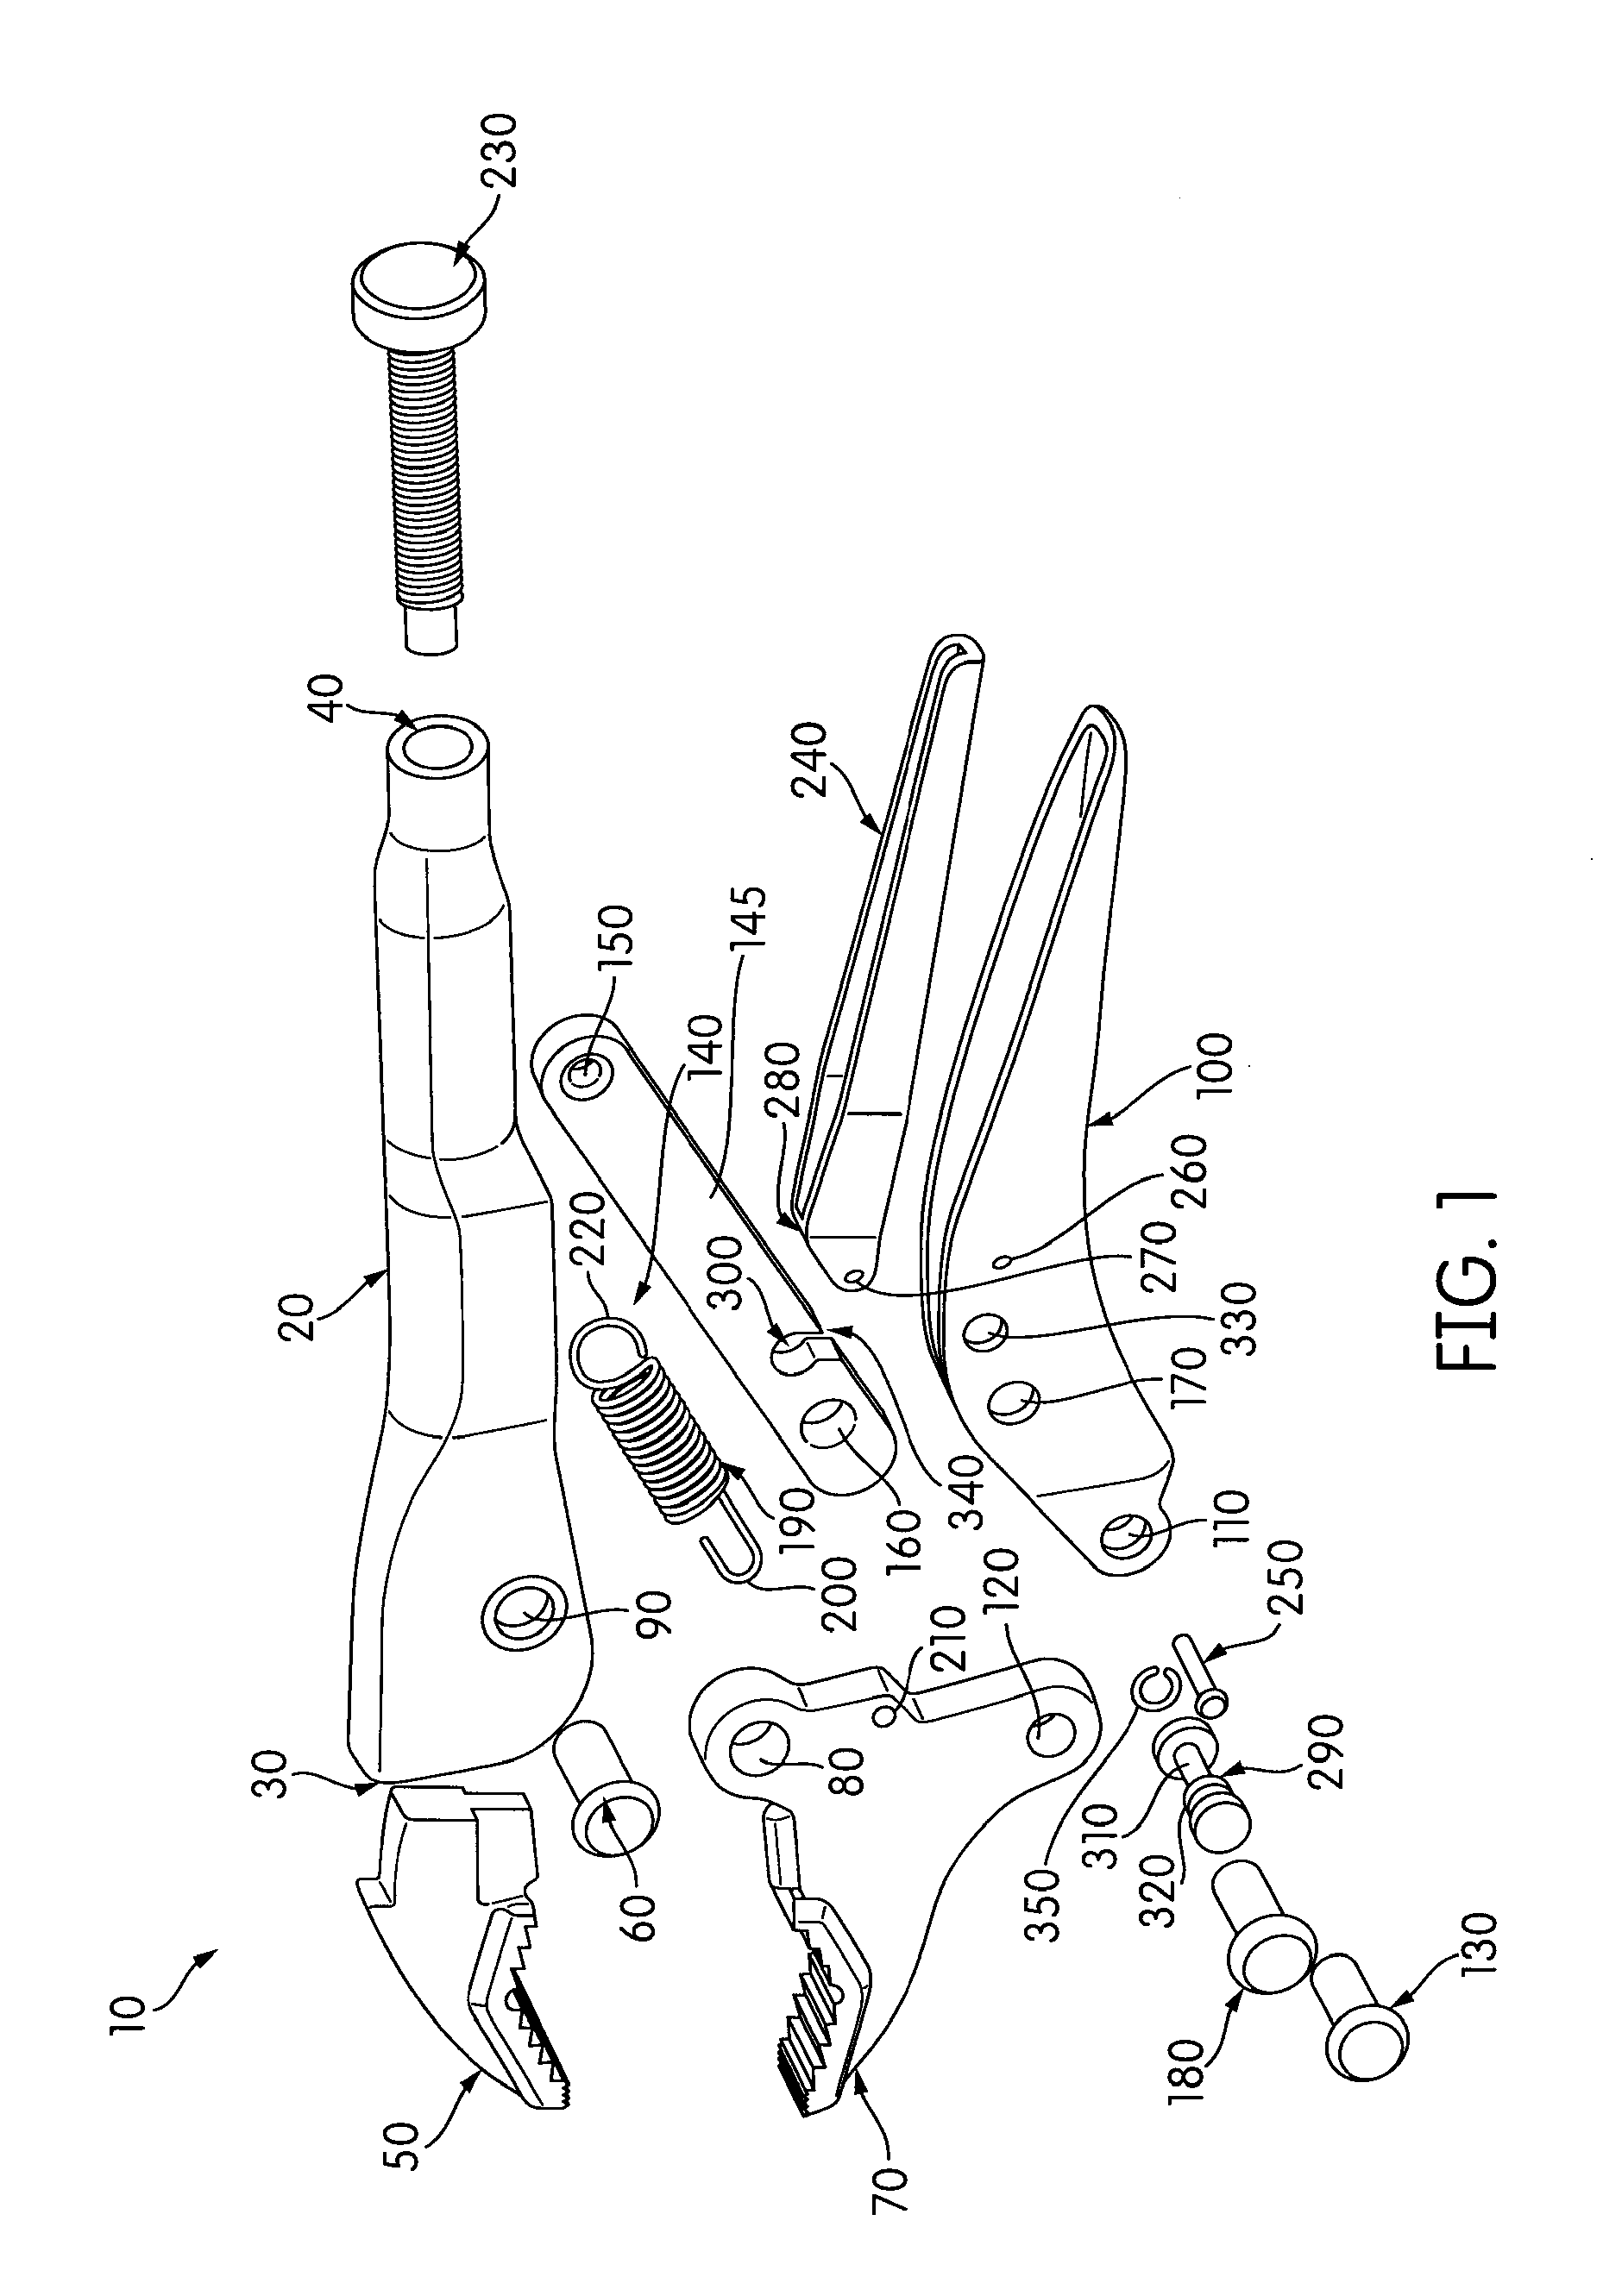 Locking pliers with handle locking mechanism